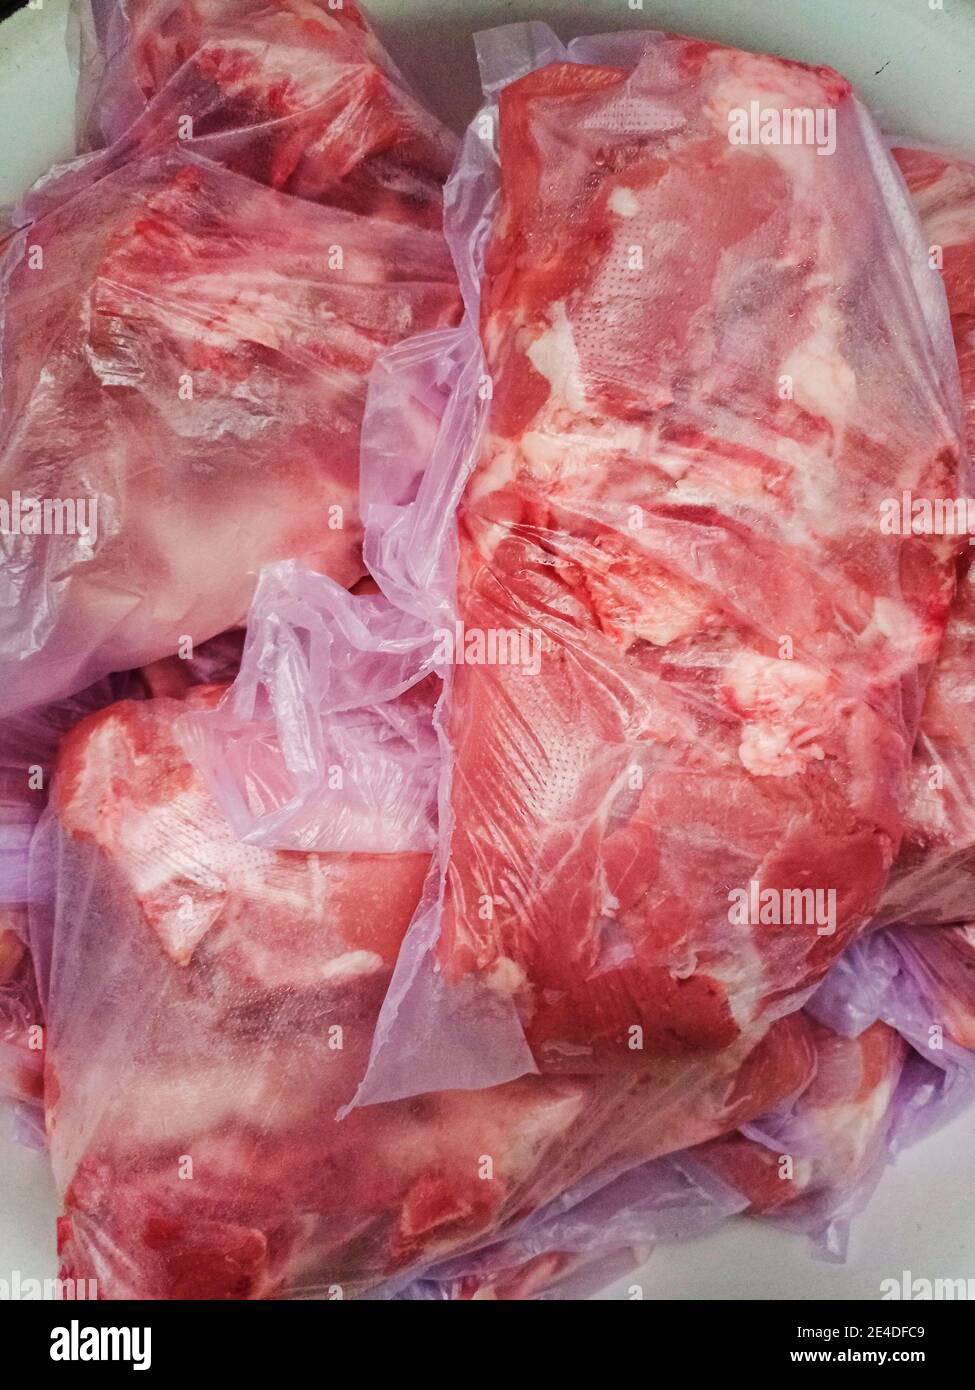 https://c8.alamy.com/comp/2E4DFC9/frozen-meat-in-a-plastic-bag-a-piece-of-frozen-meat-wrapped-in-a-plastic-bag-2E4DFC9.jpg